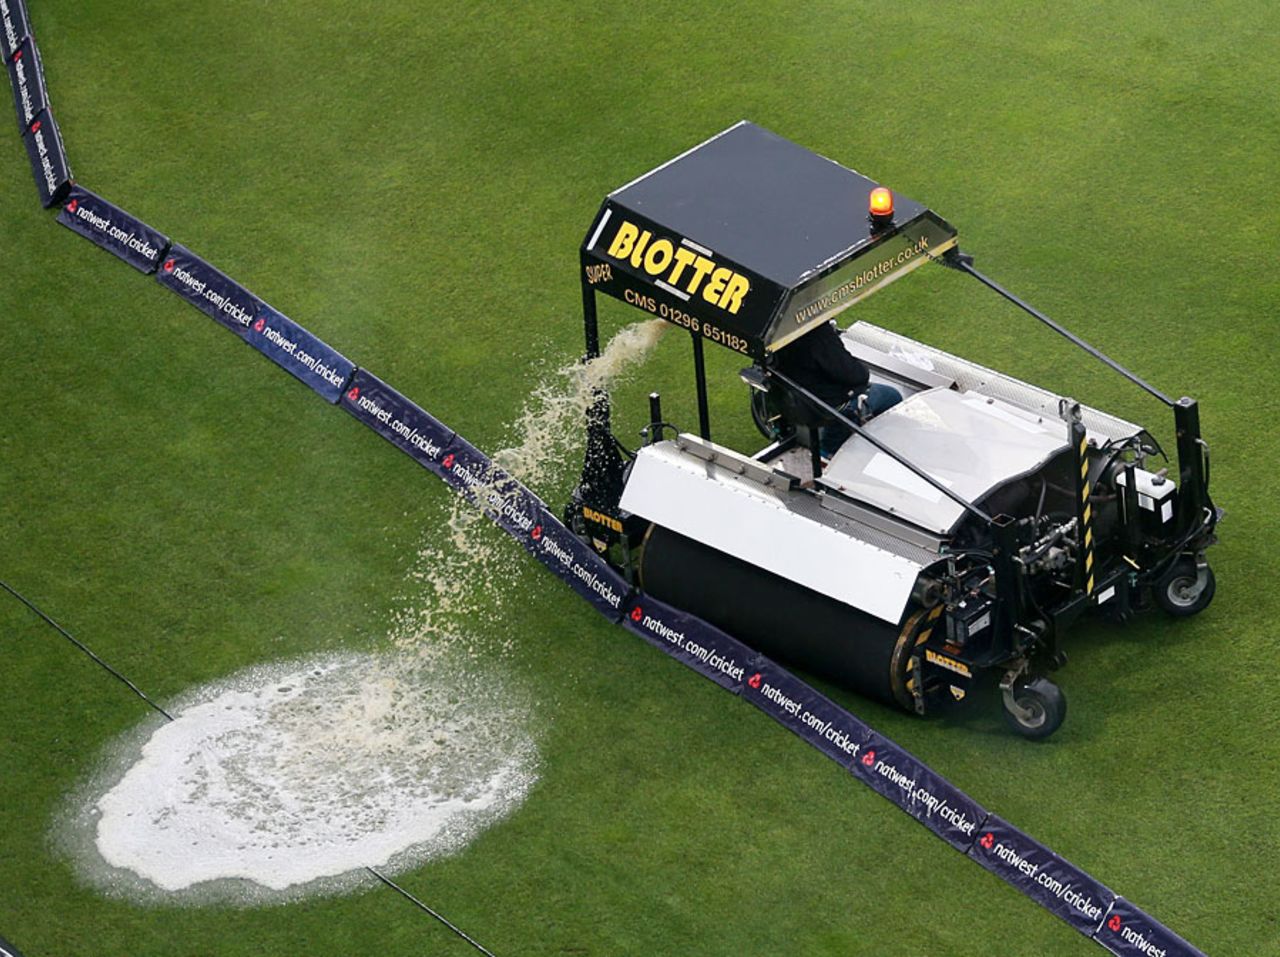 The Edgbaston Blotter was hard at work as the rain fell, England v Australia, 3rd NatWest ODI, Edgbaston, September 11, 2013